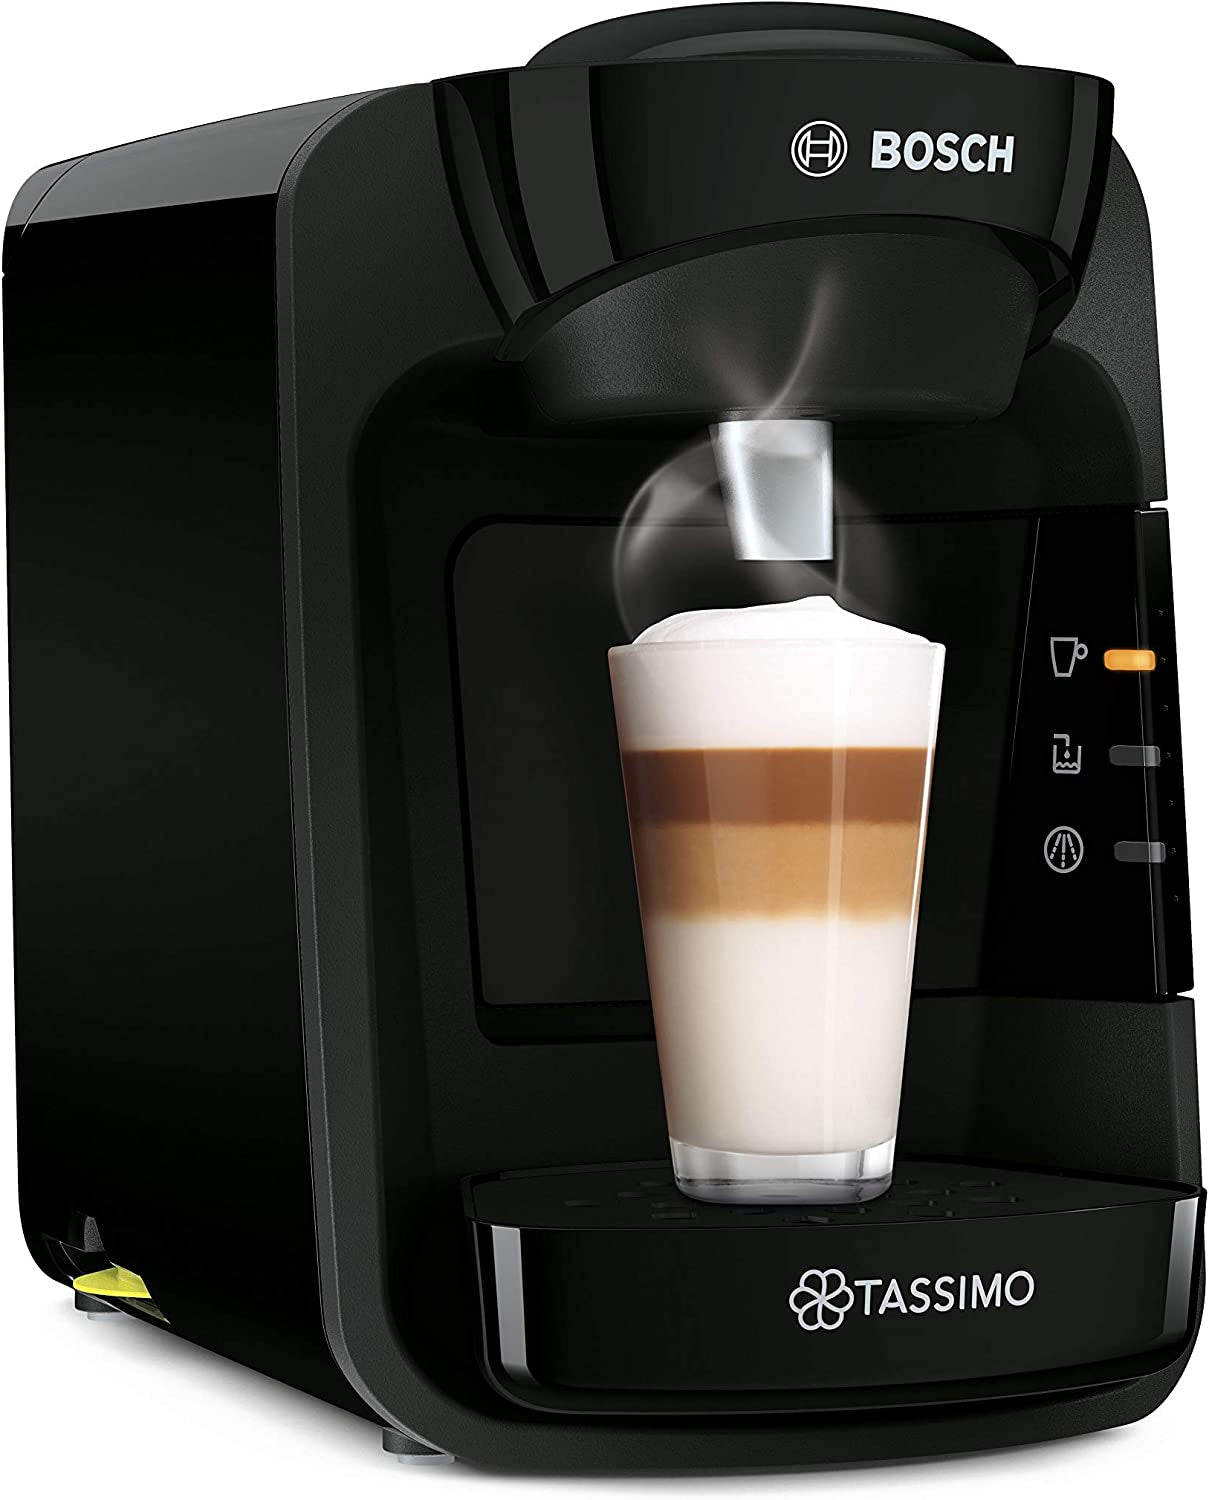 by Bosch Suny 'Special Edition' TAS3102GB Coffee Machine,1300 Watt, 0.8 Litre - Black